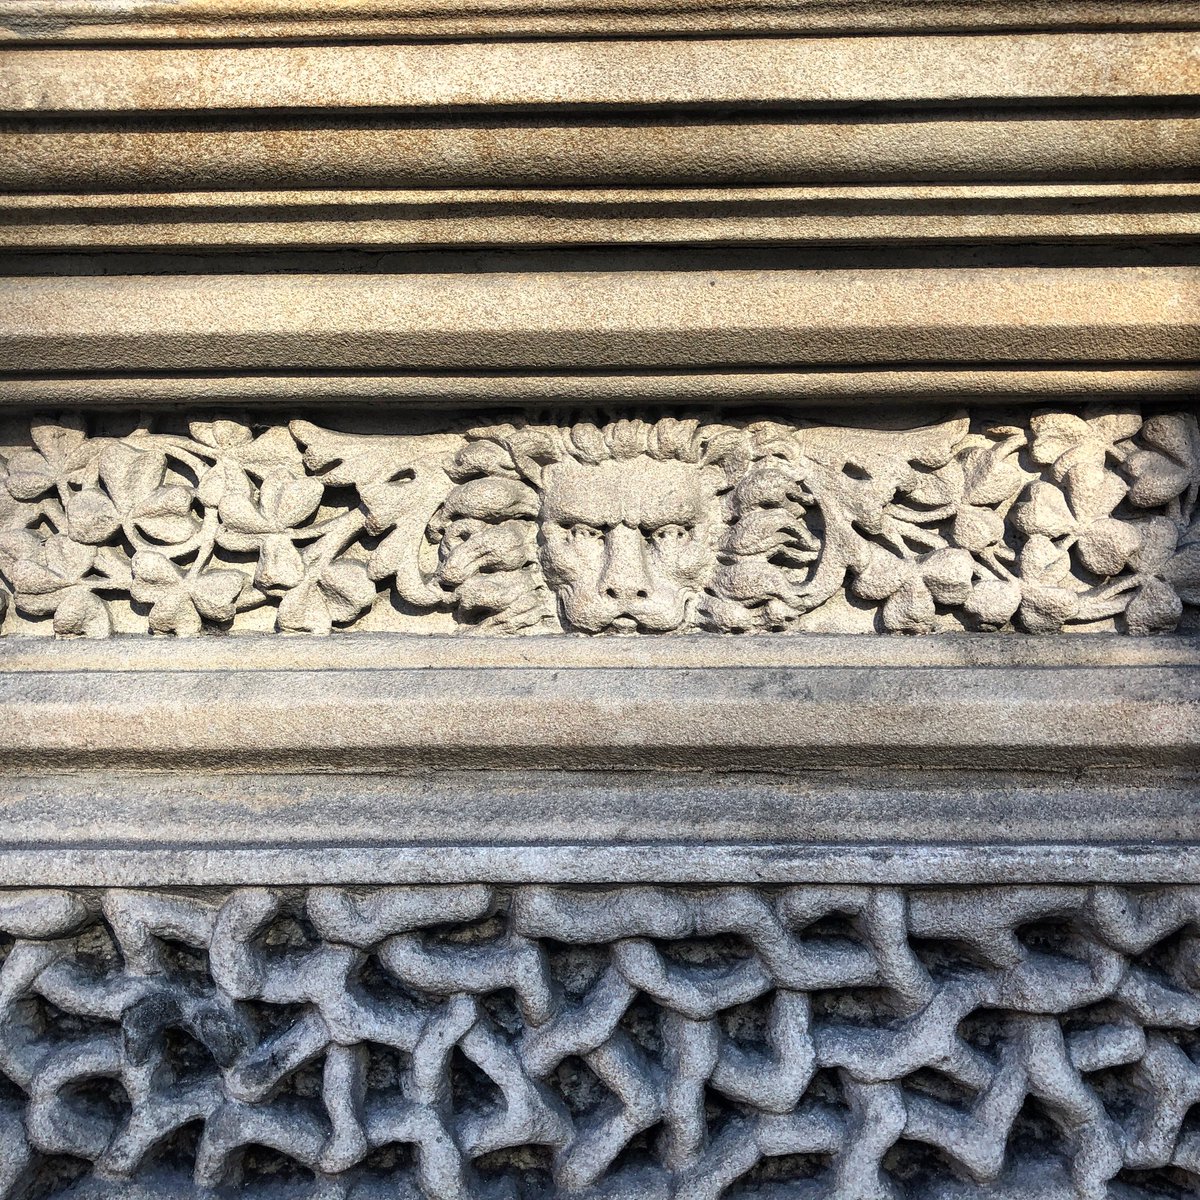 Spotted this mane man 🦁bathing in the sun today 

#hiddengems #architecturaldetails #masons #masonry #carvedstone #architecturalphotography #belfast #scottishprovidentbuilding #lionshead